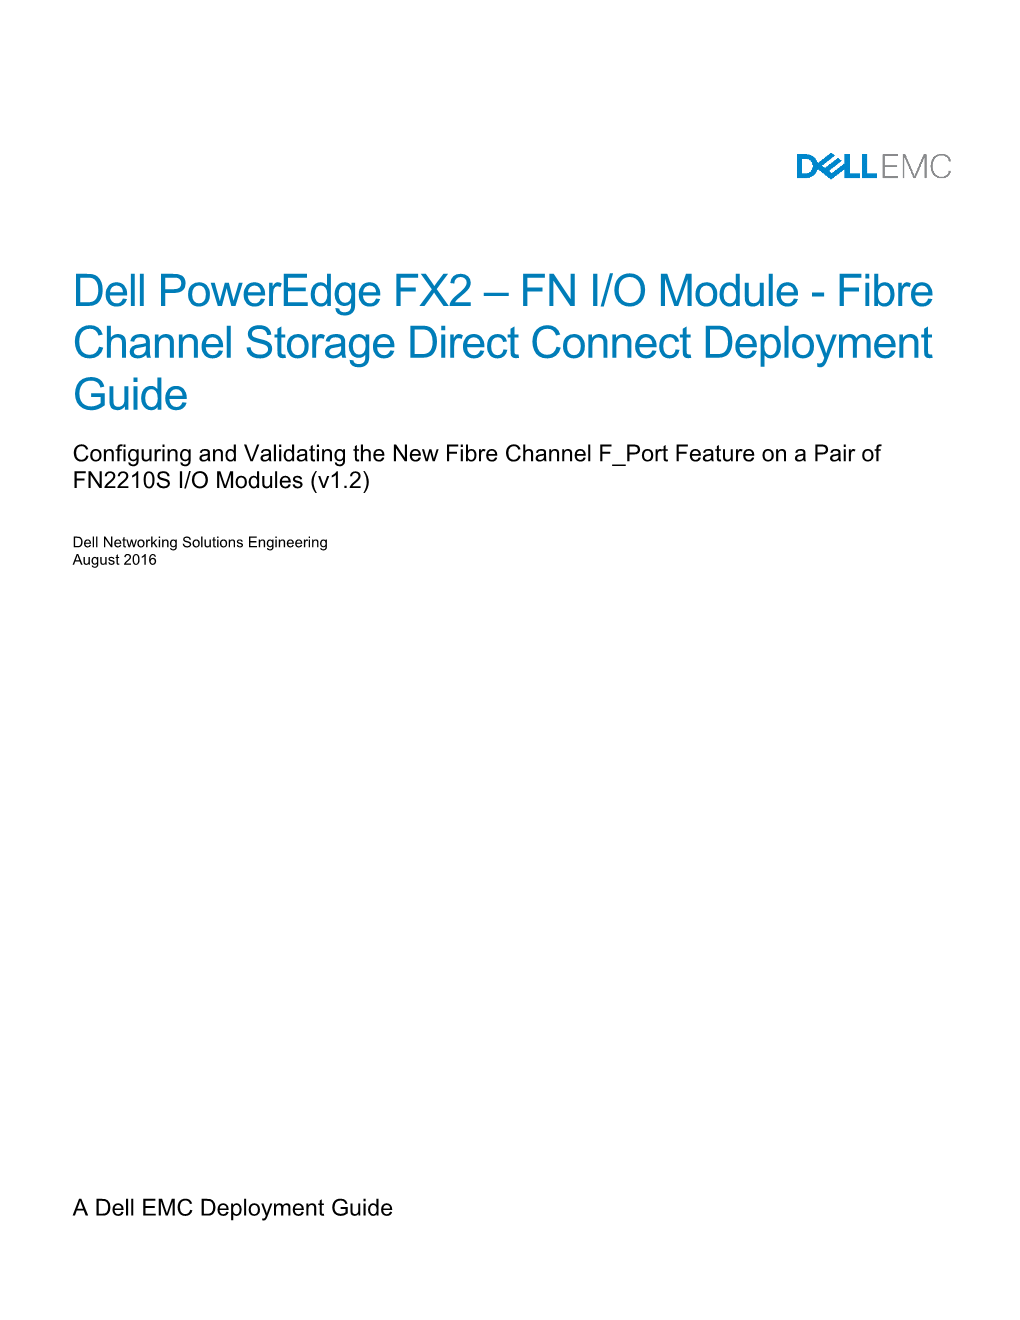 Dell Poweredge FX2 – FN I/O Module - Fibre Channel Storage Direct Connect Deployment Guide